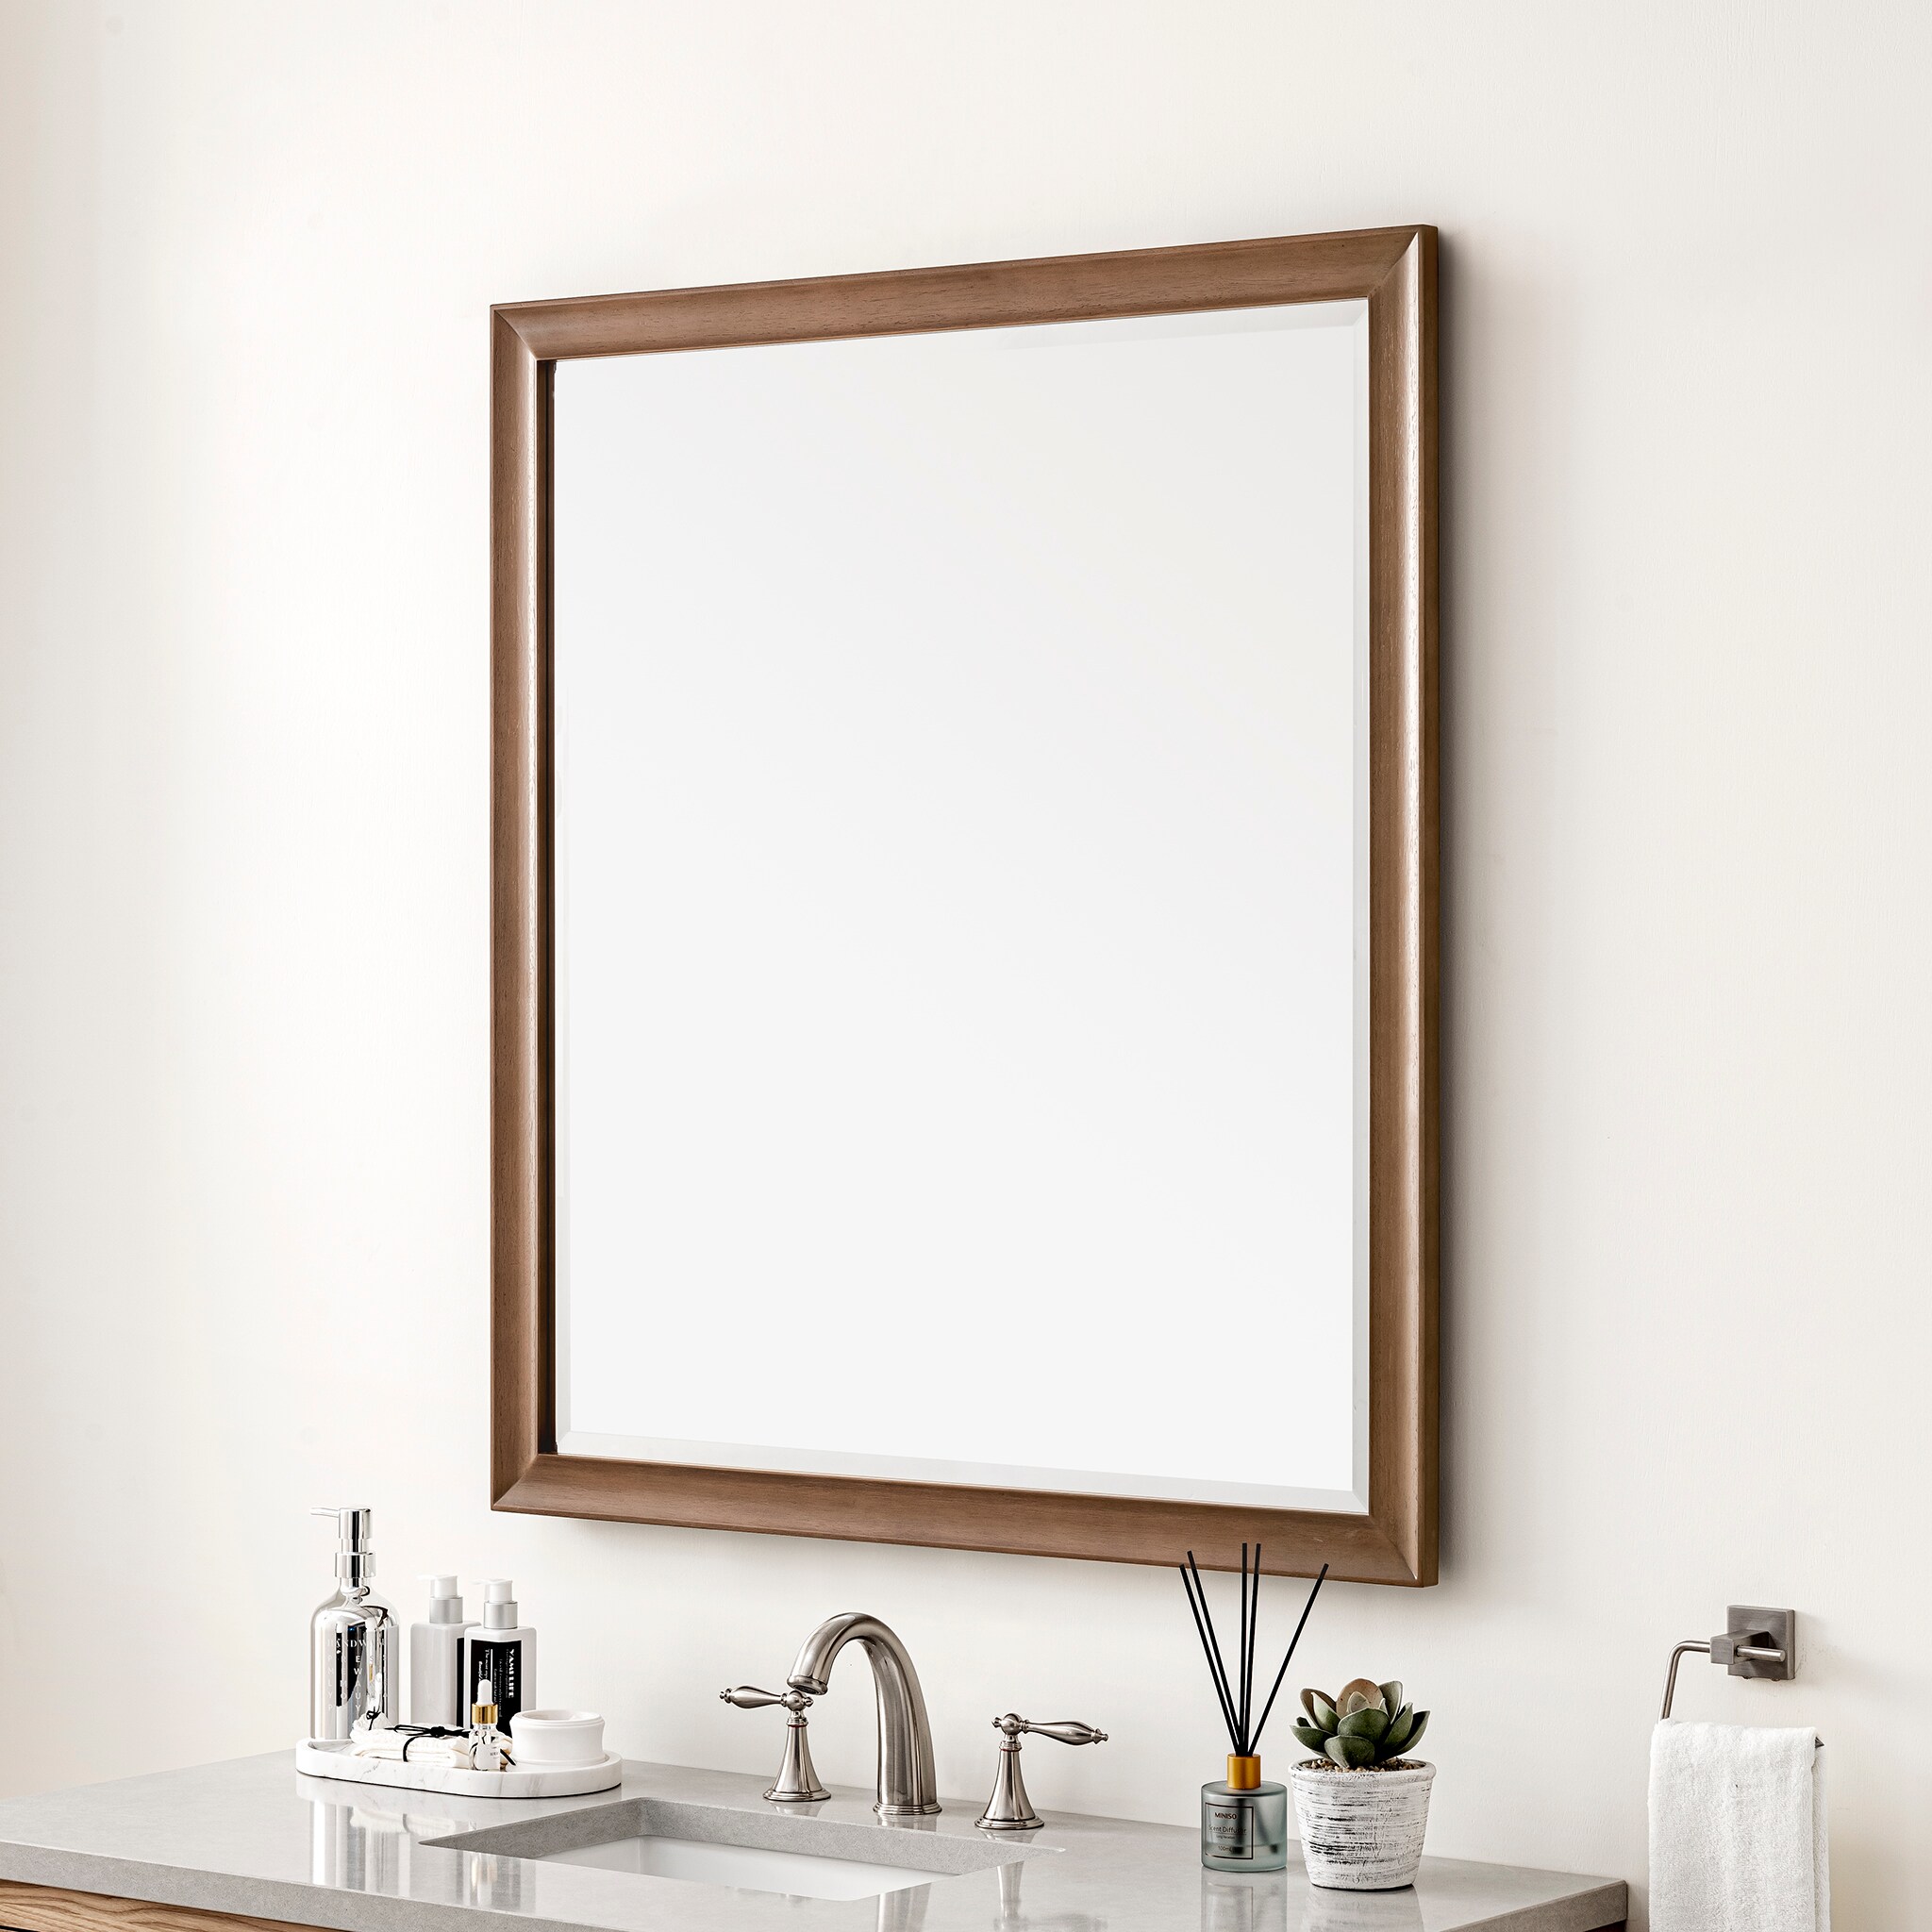 Bobby Pin Holder / Hair Tie Holder / Cue Tip Holder Bathroom Mirror  Attaching Works Brilliantly 